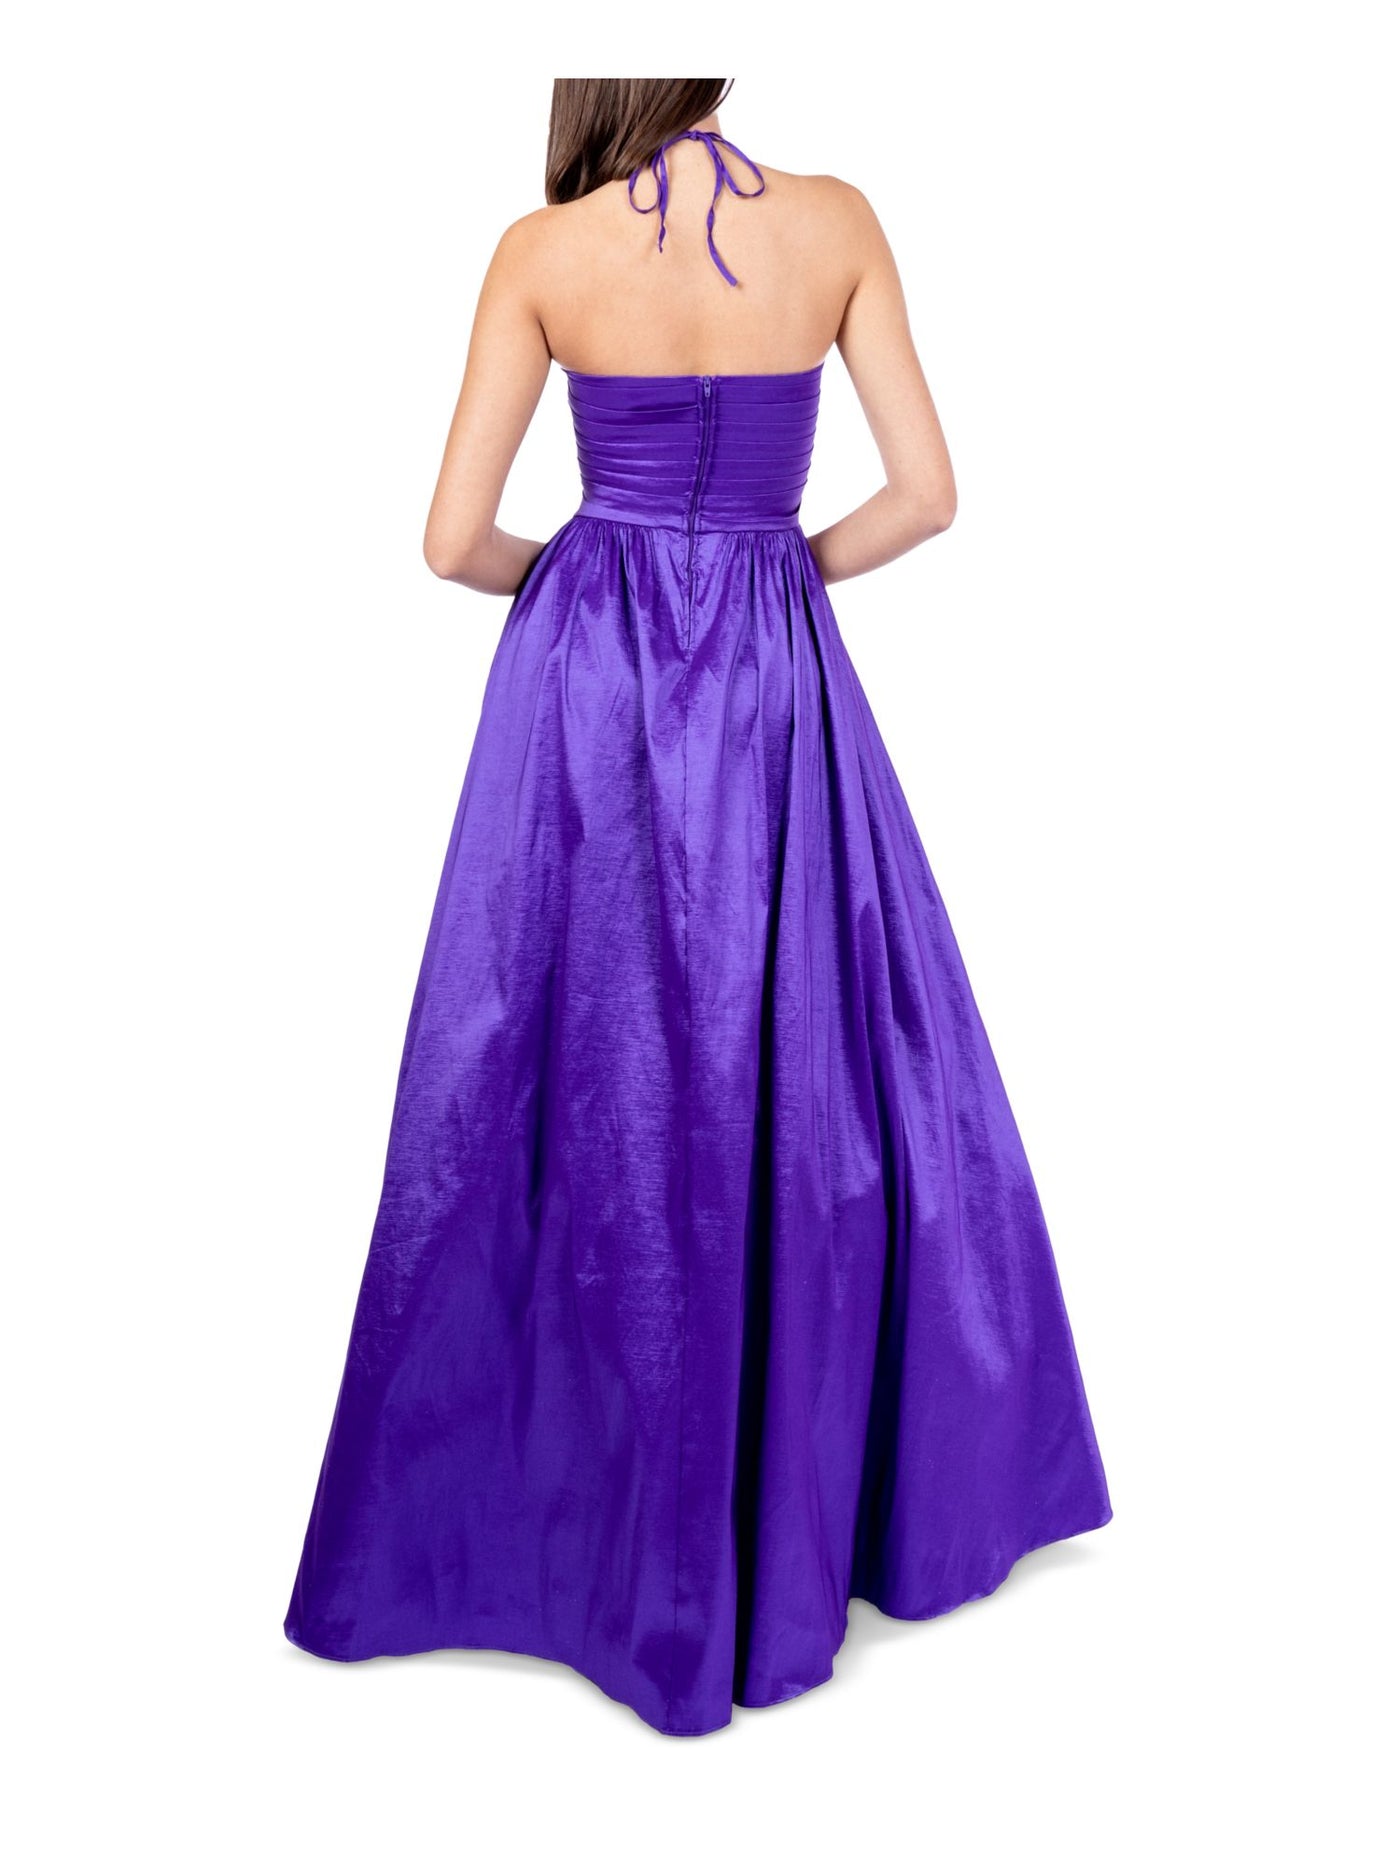 B DARLIN Womens Pleated Tie Taffeta Keyhole Front Lined Sleeveless Halter Full-Length Prom Gown Dress